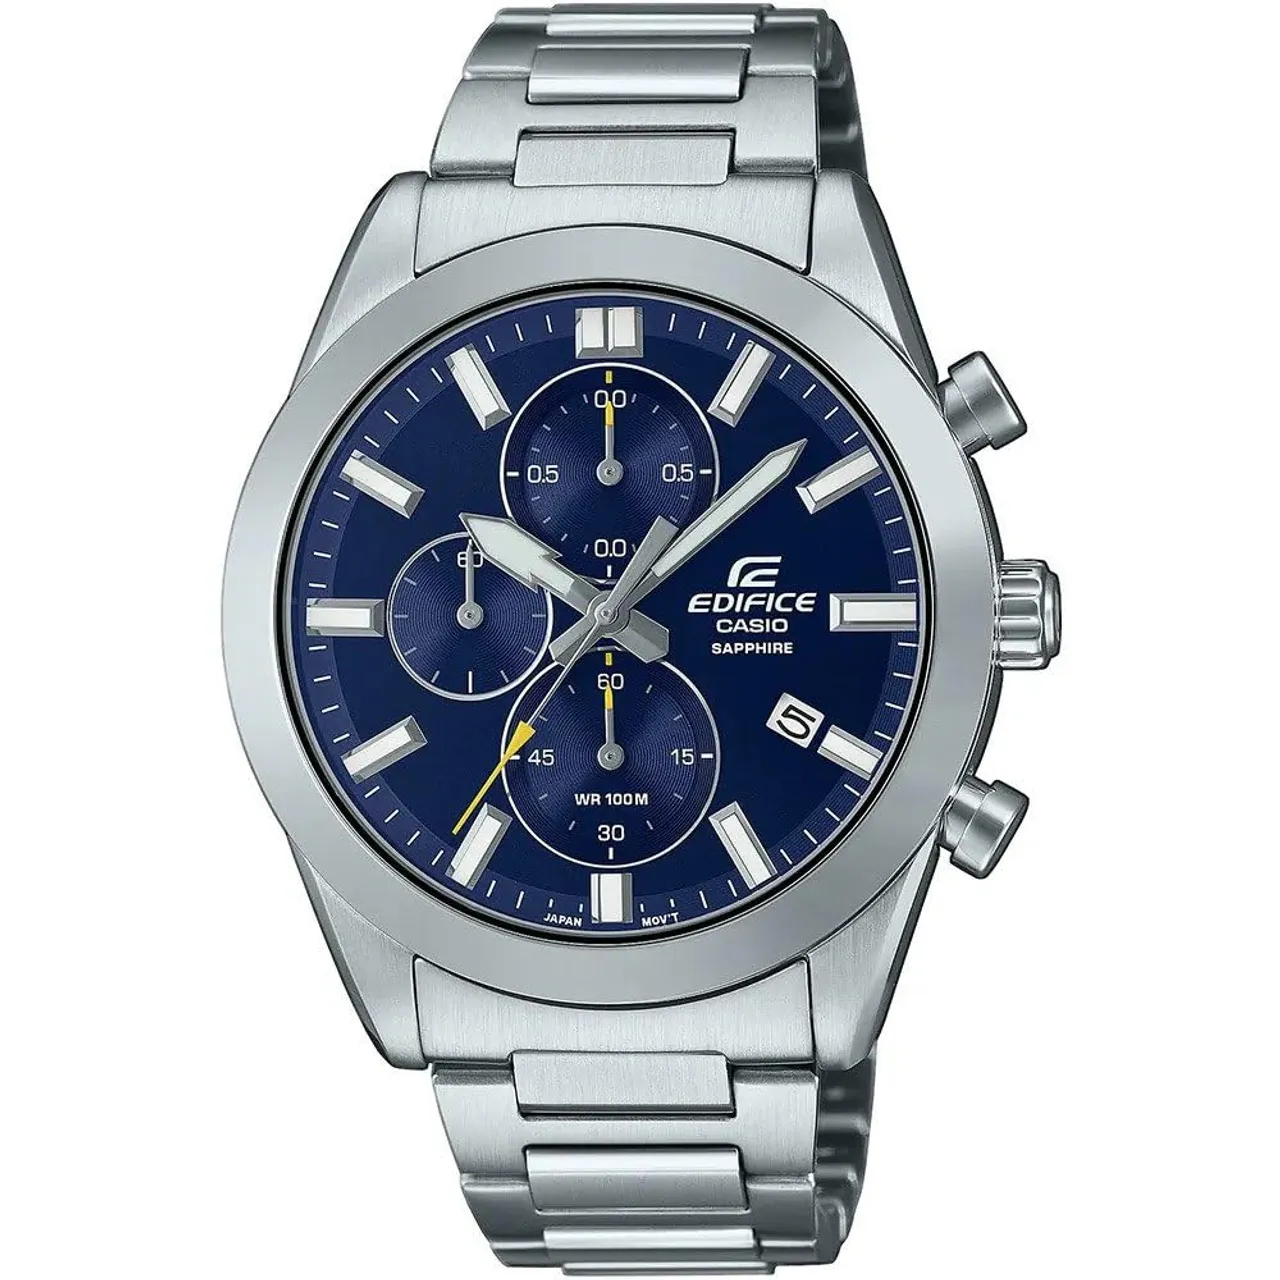 Casio Men's Chronograph Quartz Watch with Stainless Steel